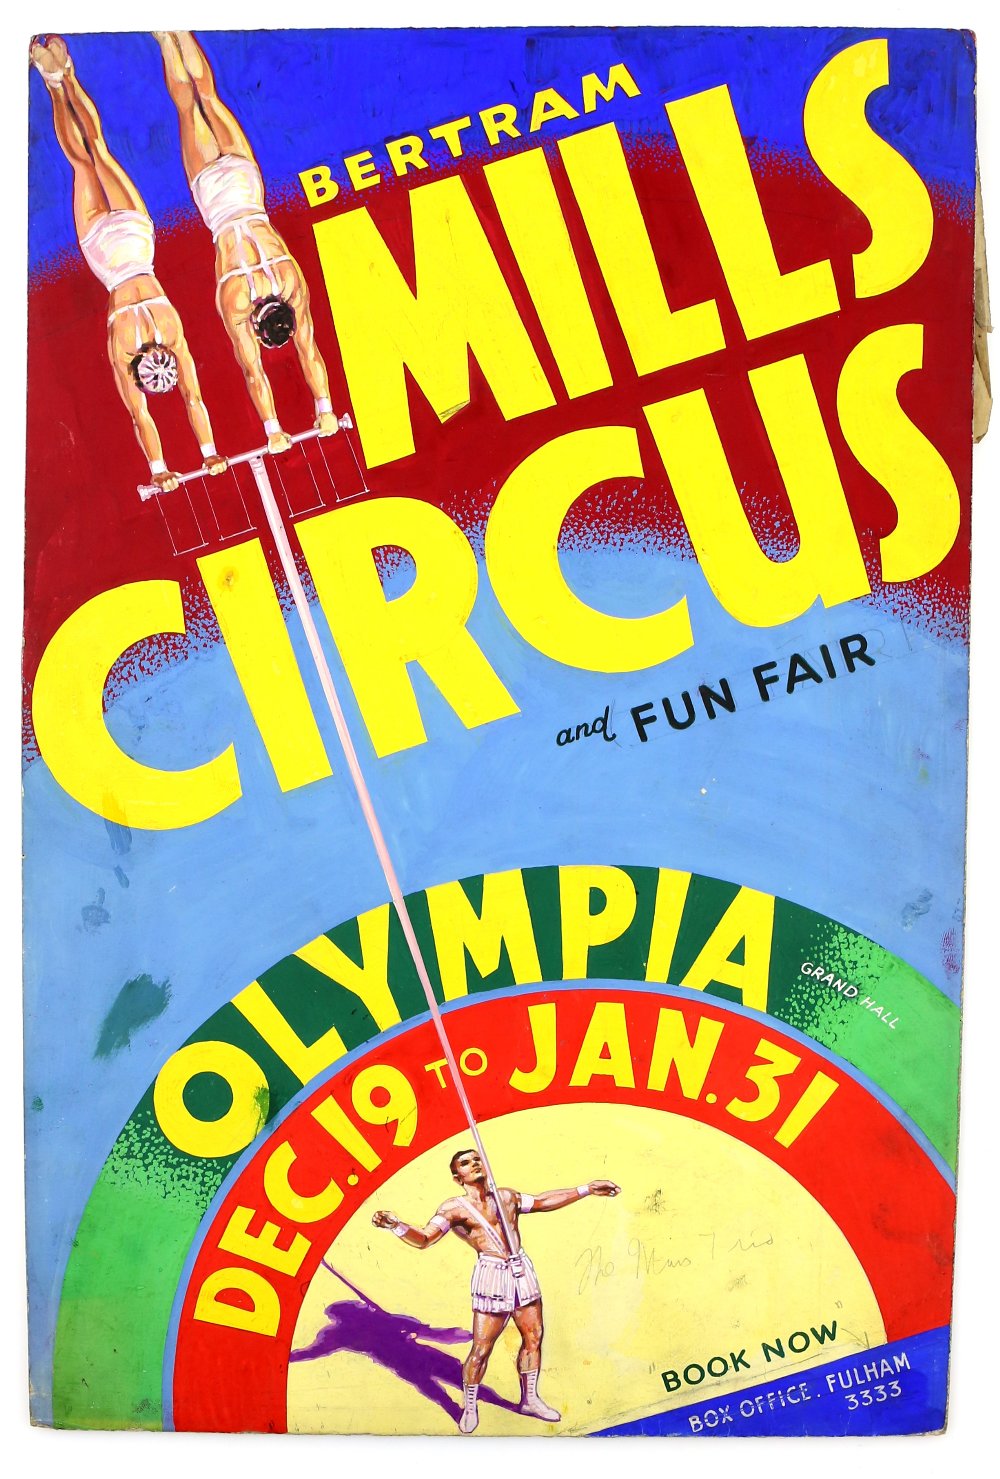 Bertram Mills Circus and Fun Fair at Olympia, featuring acrobats, original hand painted poster